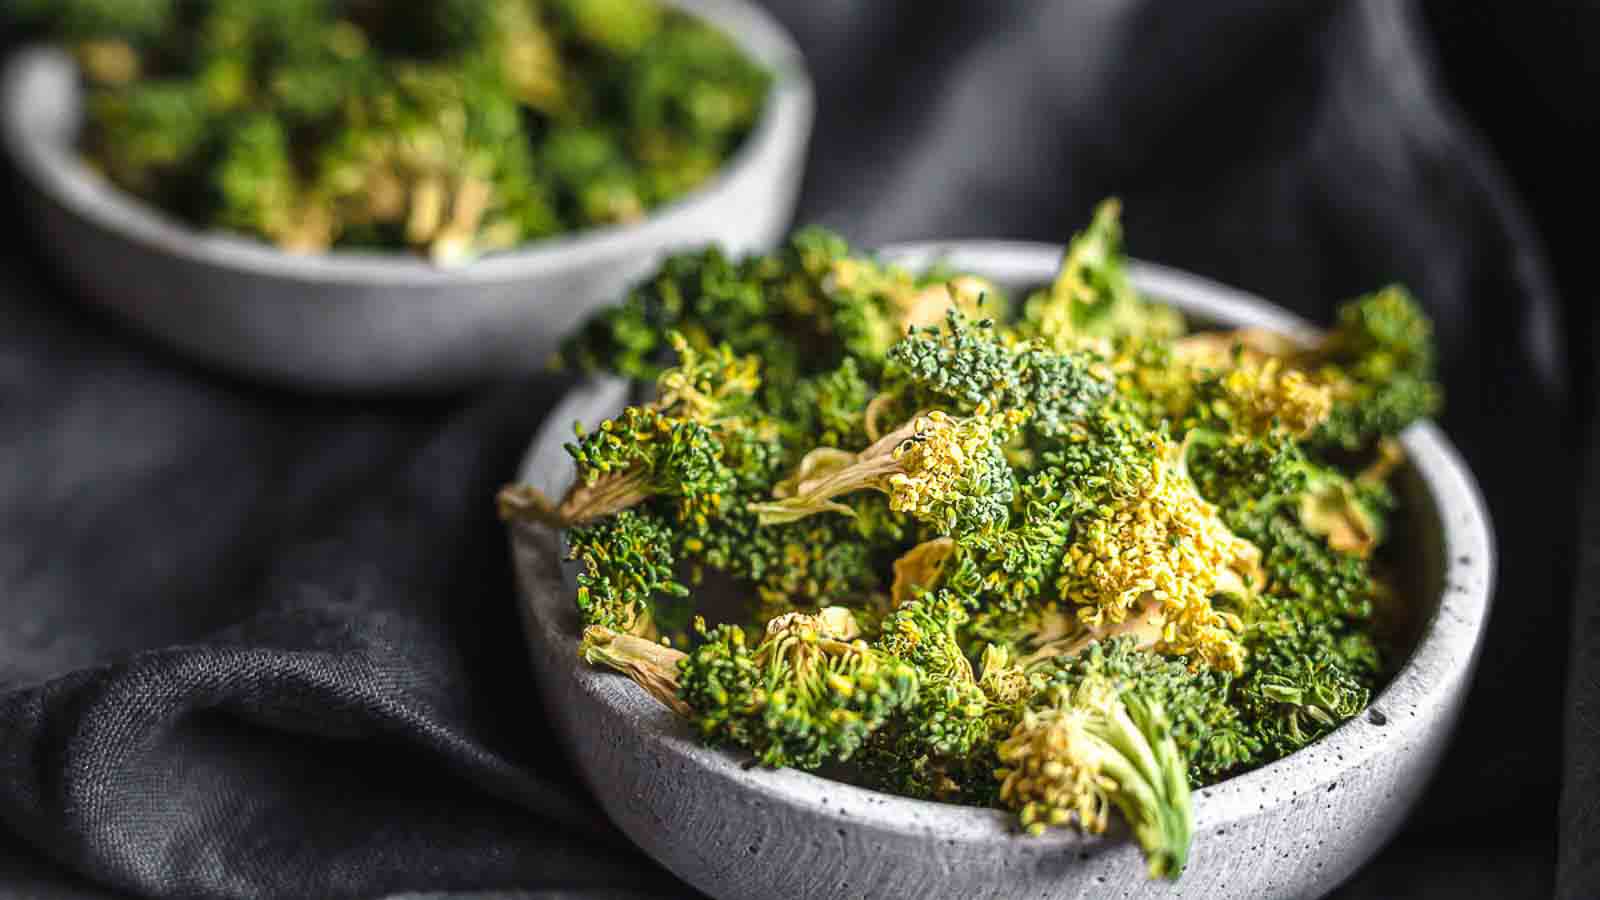 Dried Broccoli pieces inside a bowl.